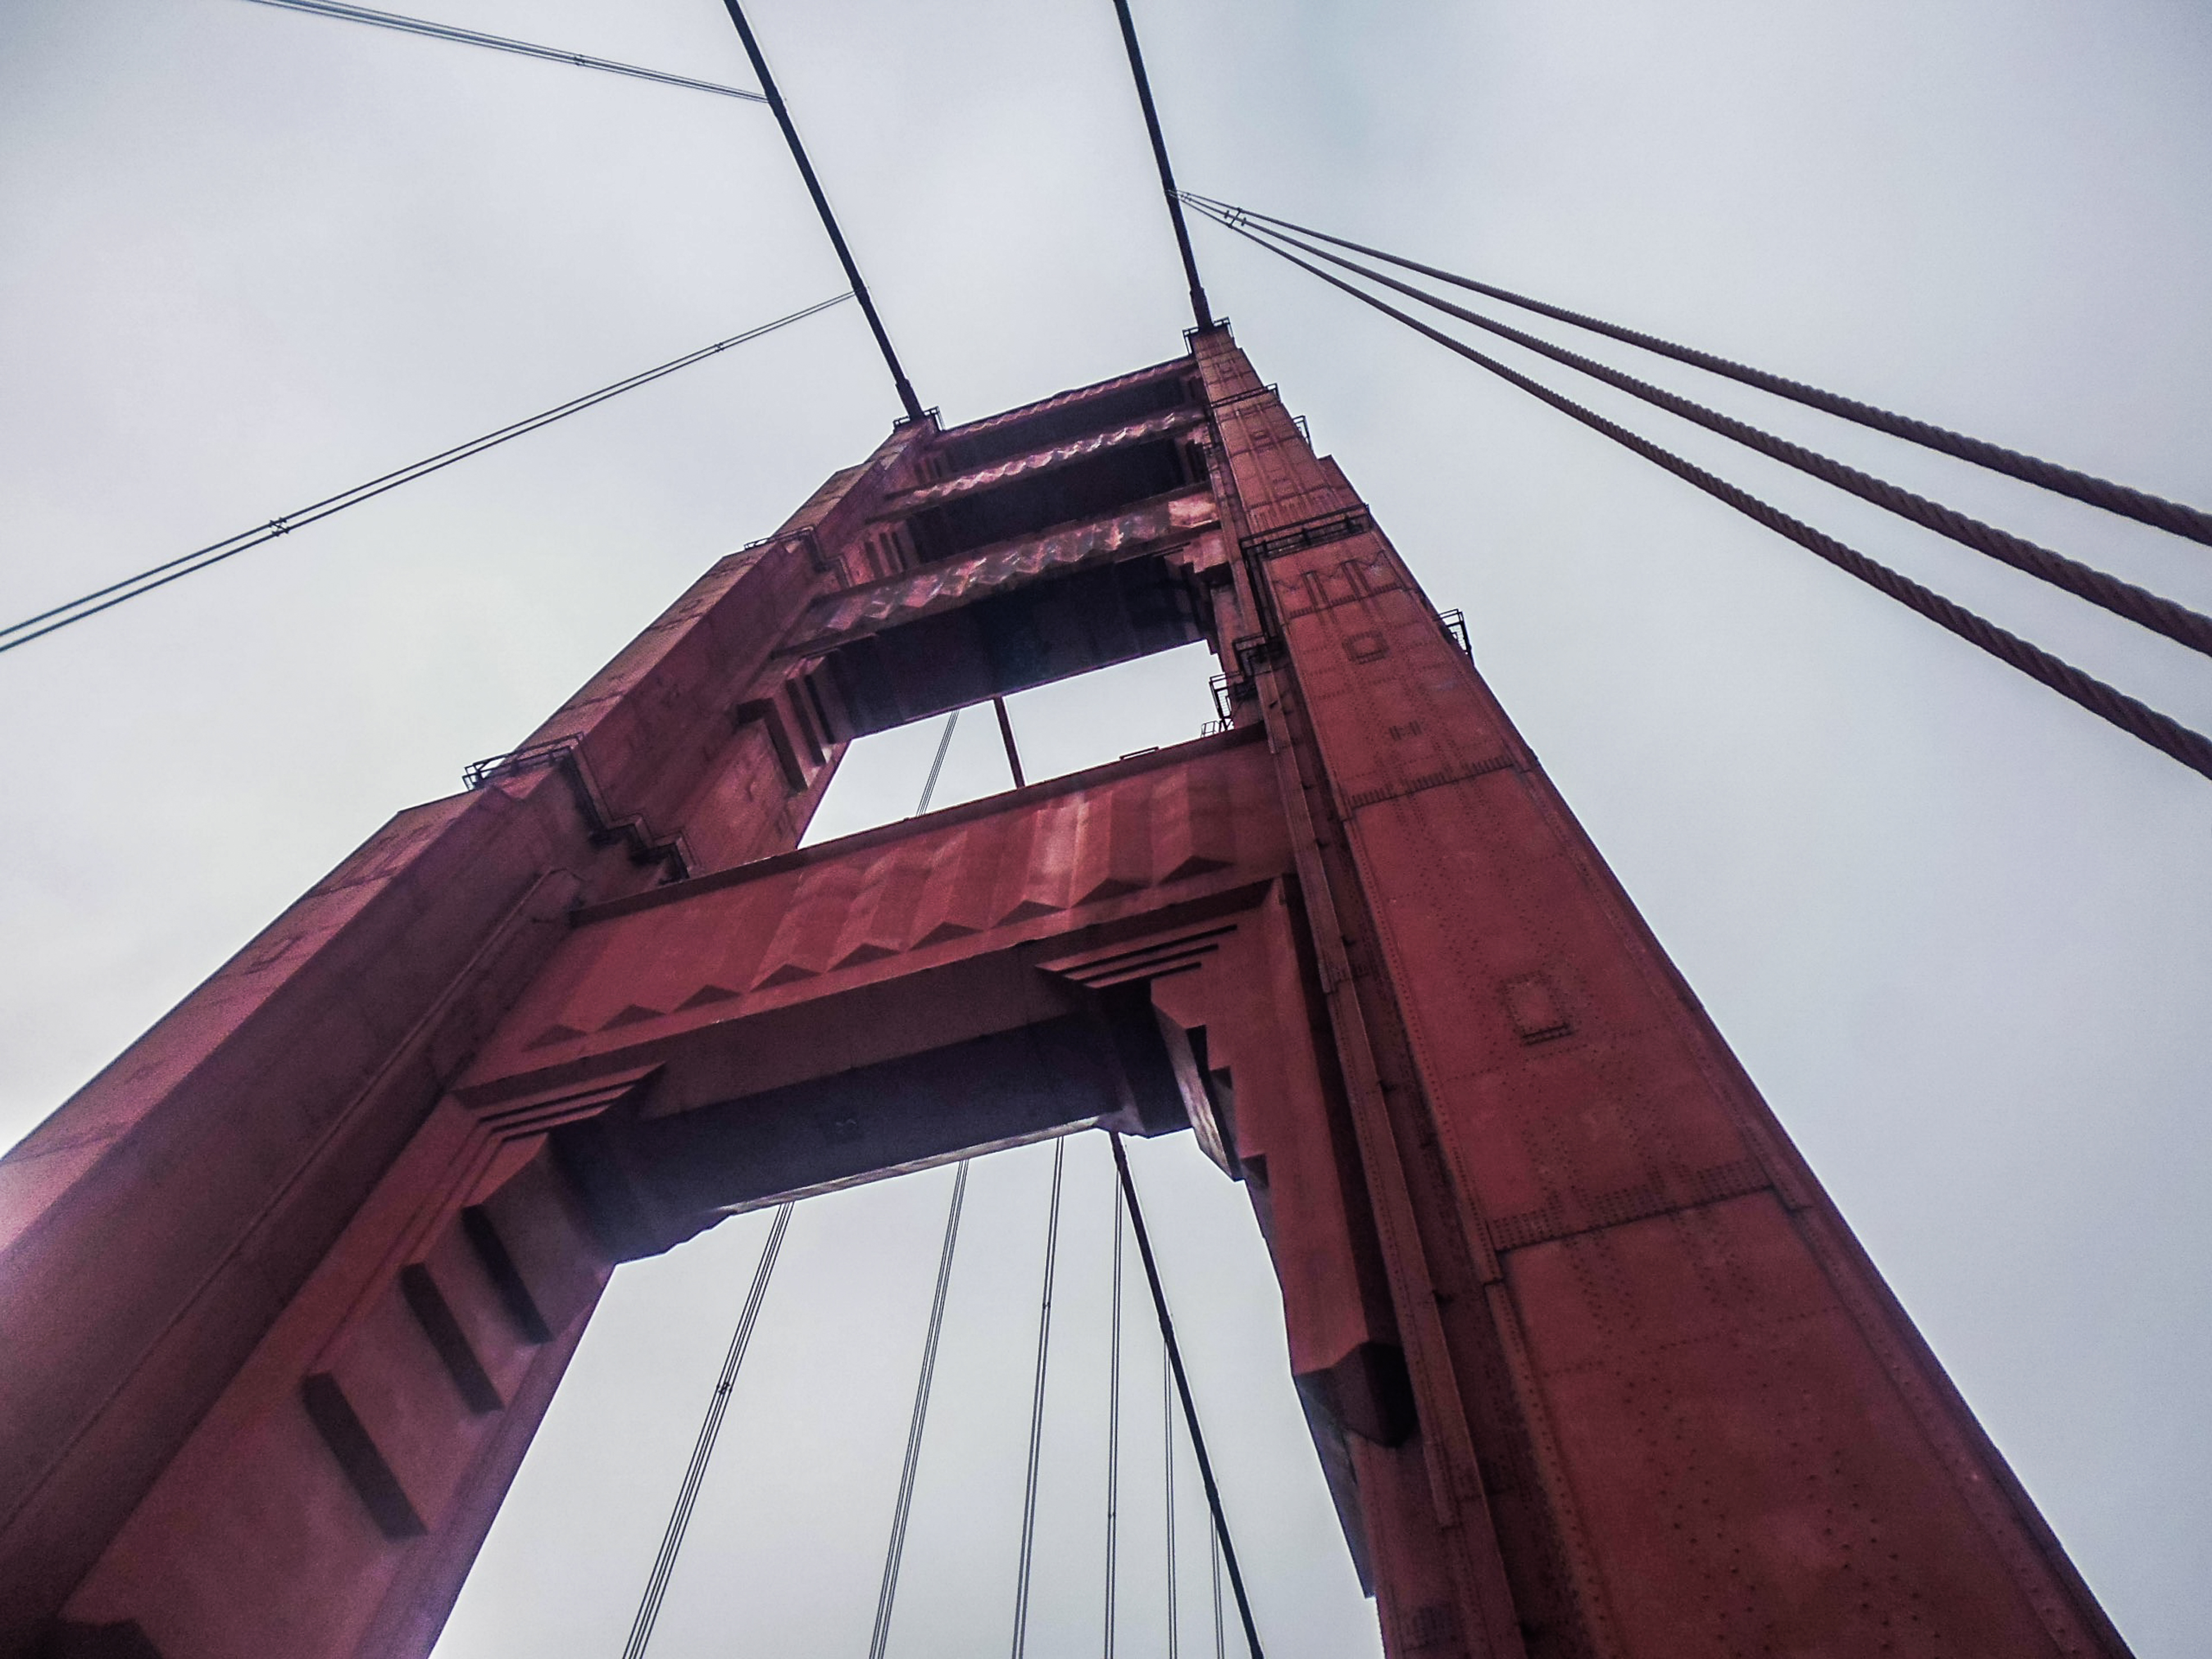 Golden Gate bridge San Francisco United States, Verenigde Staten